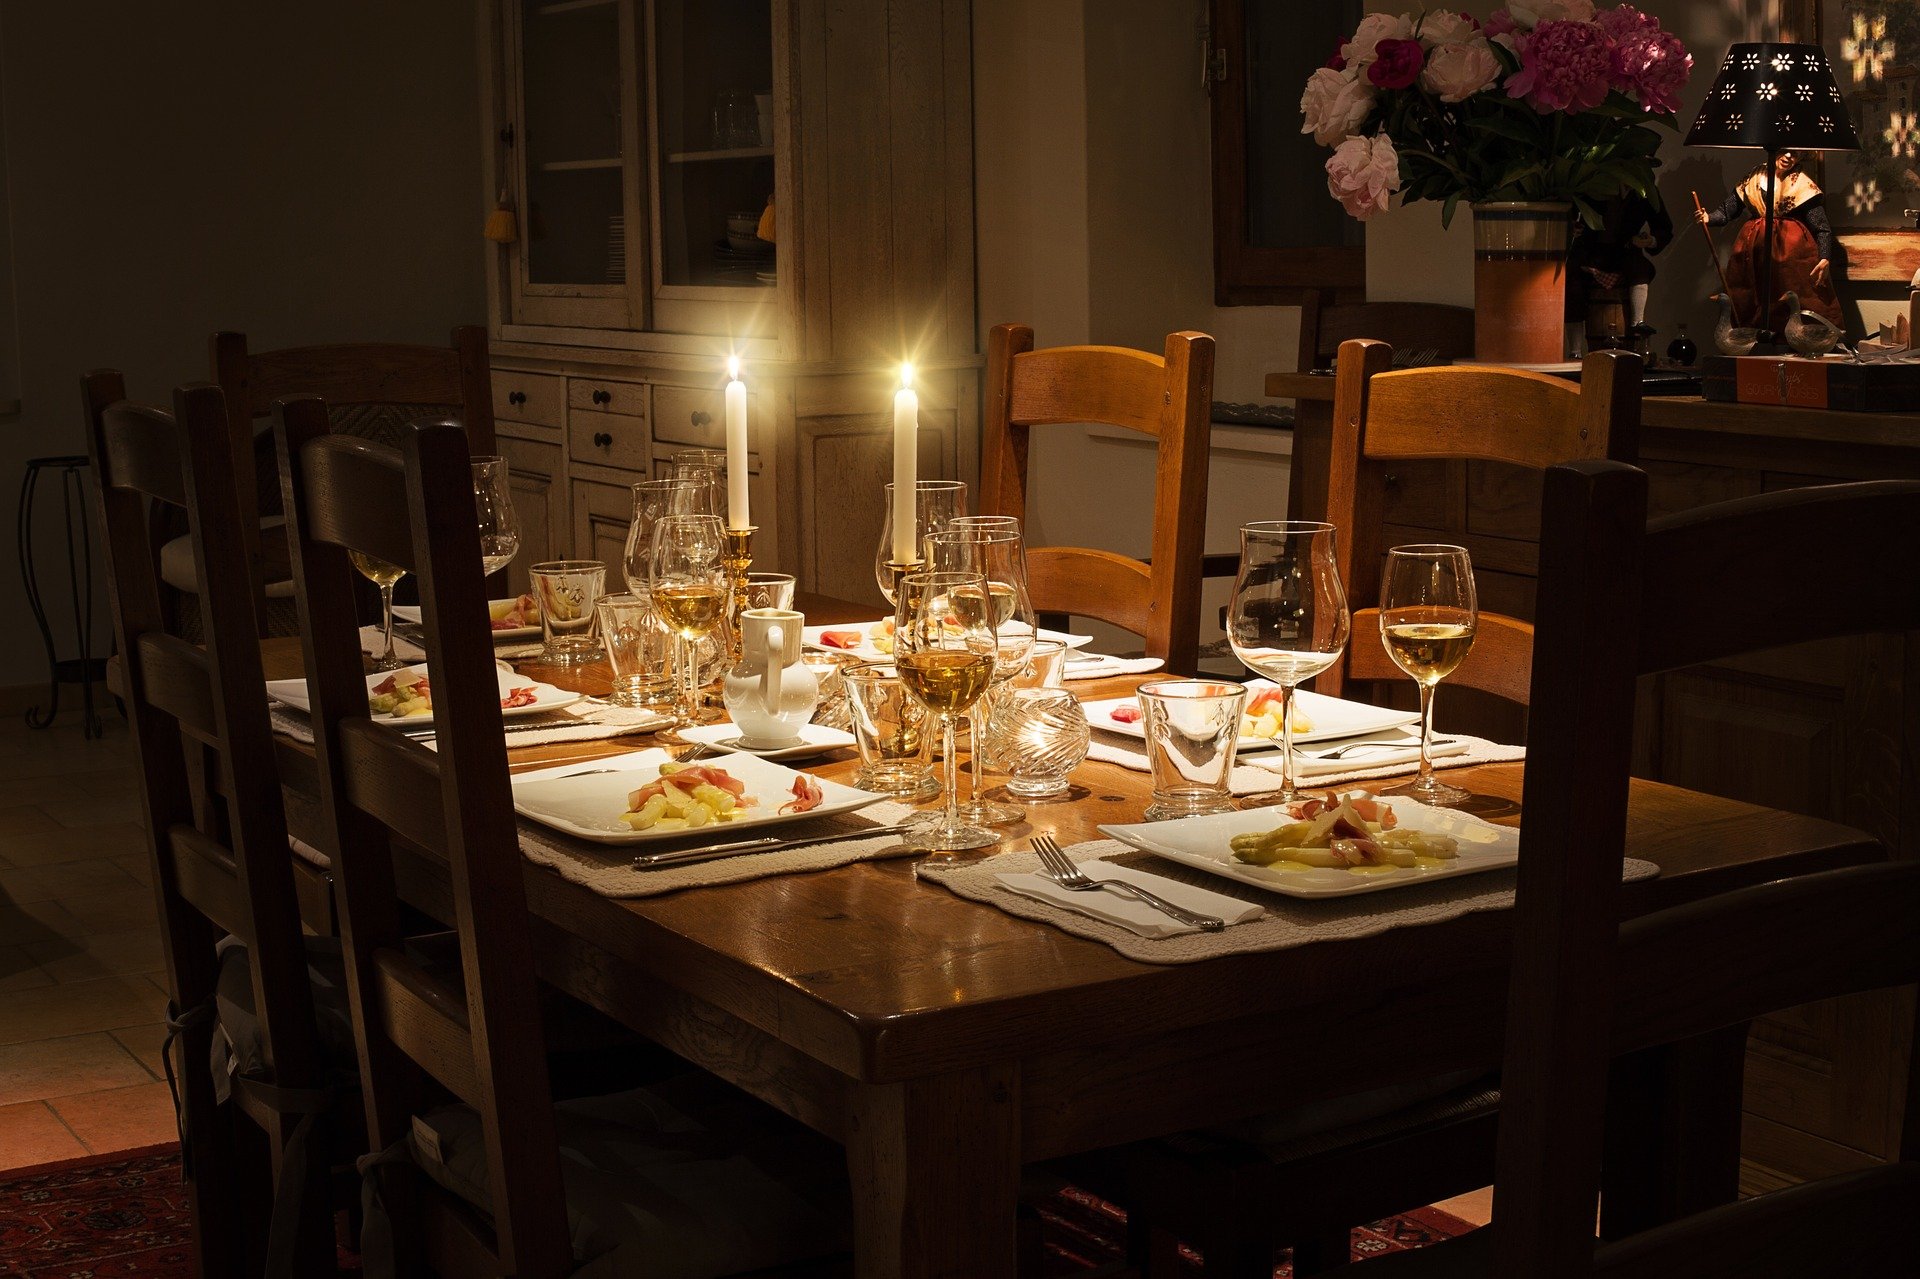 A table set for dinner | Image: Pixabay.